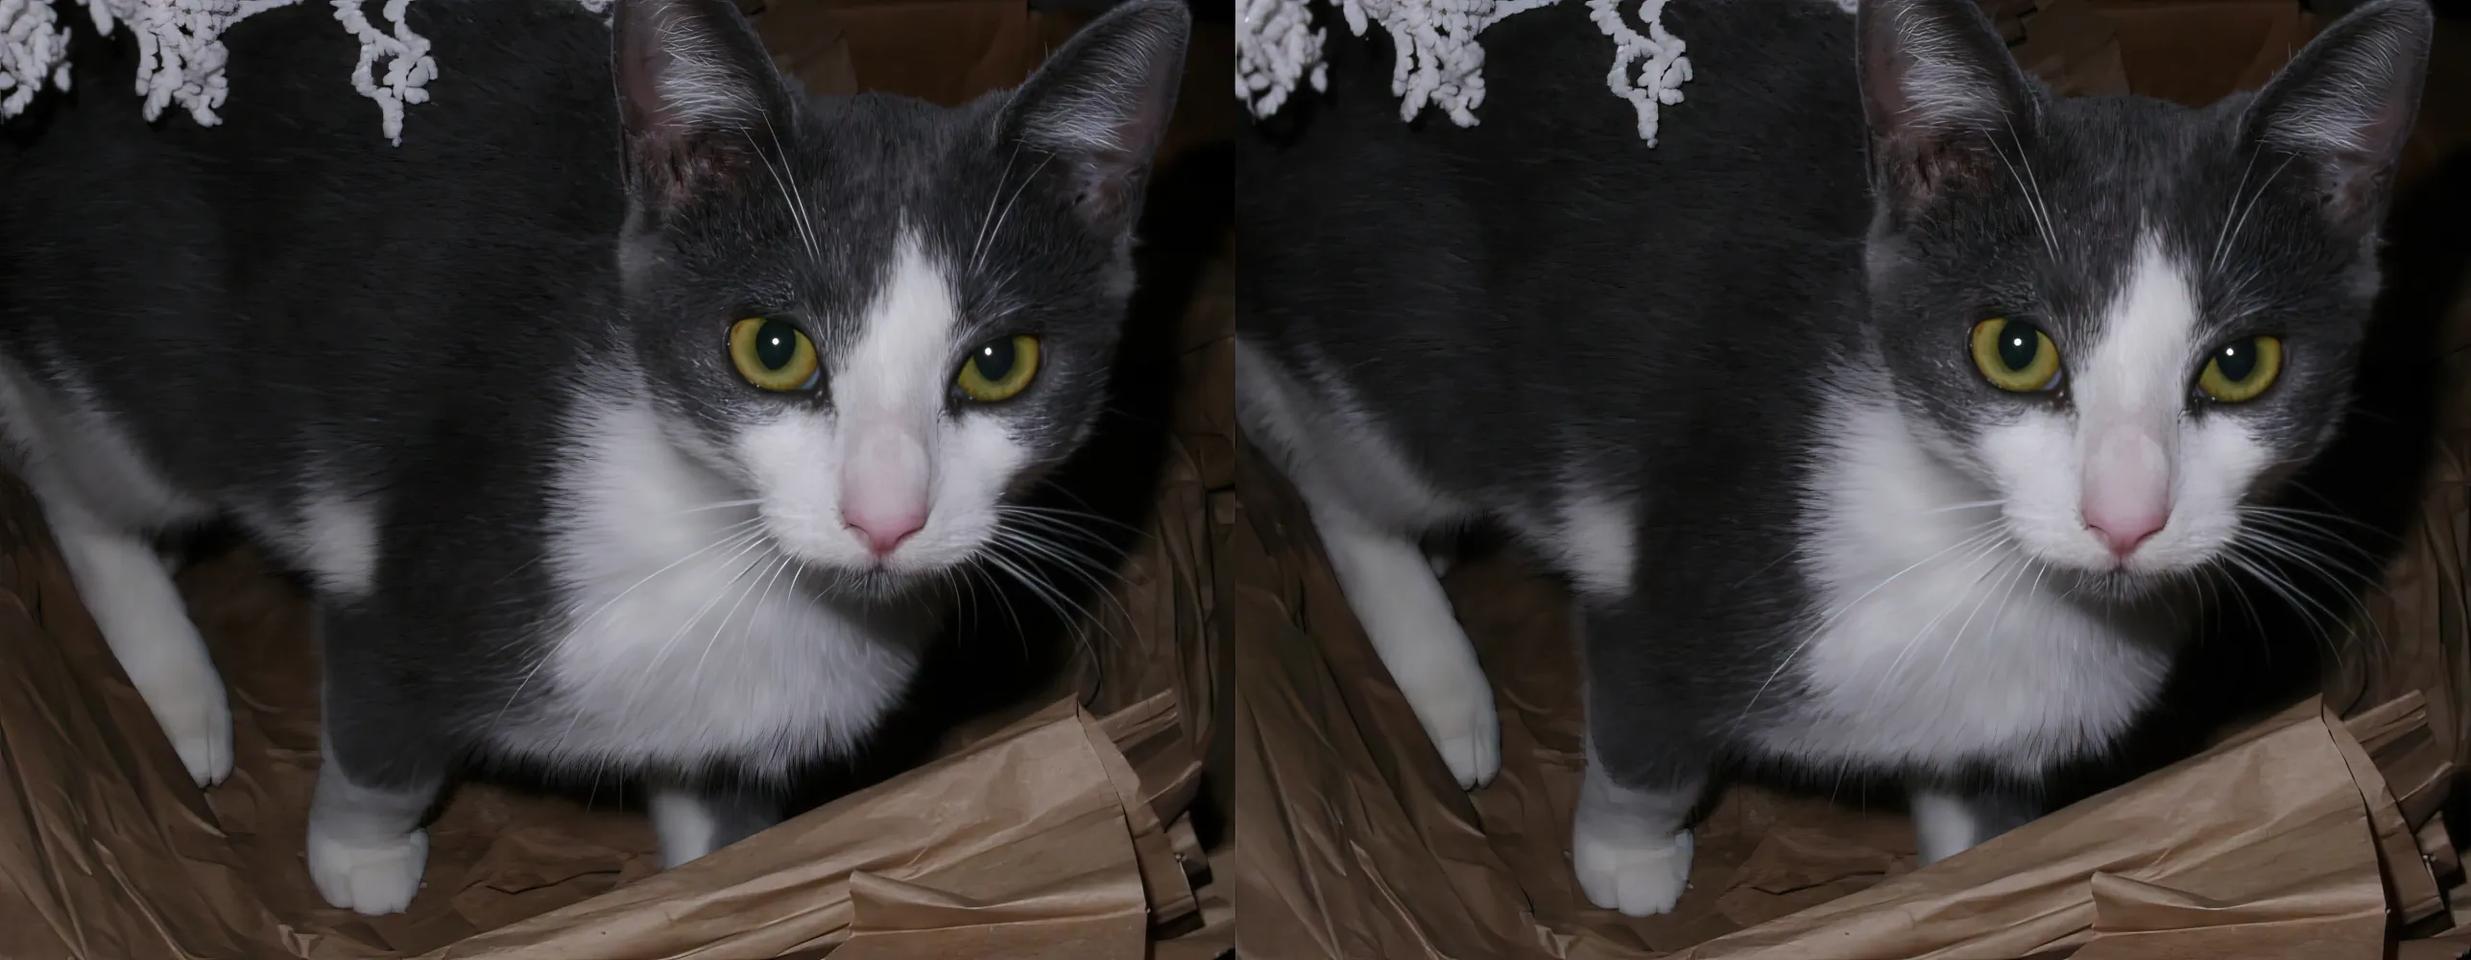 Kittens Love Boxes